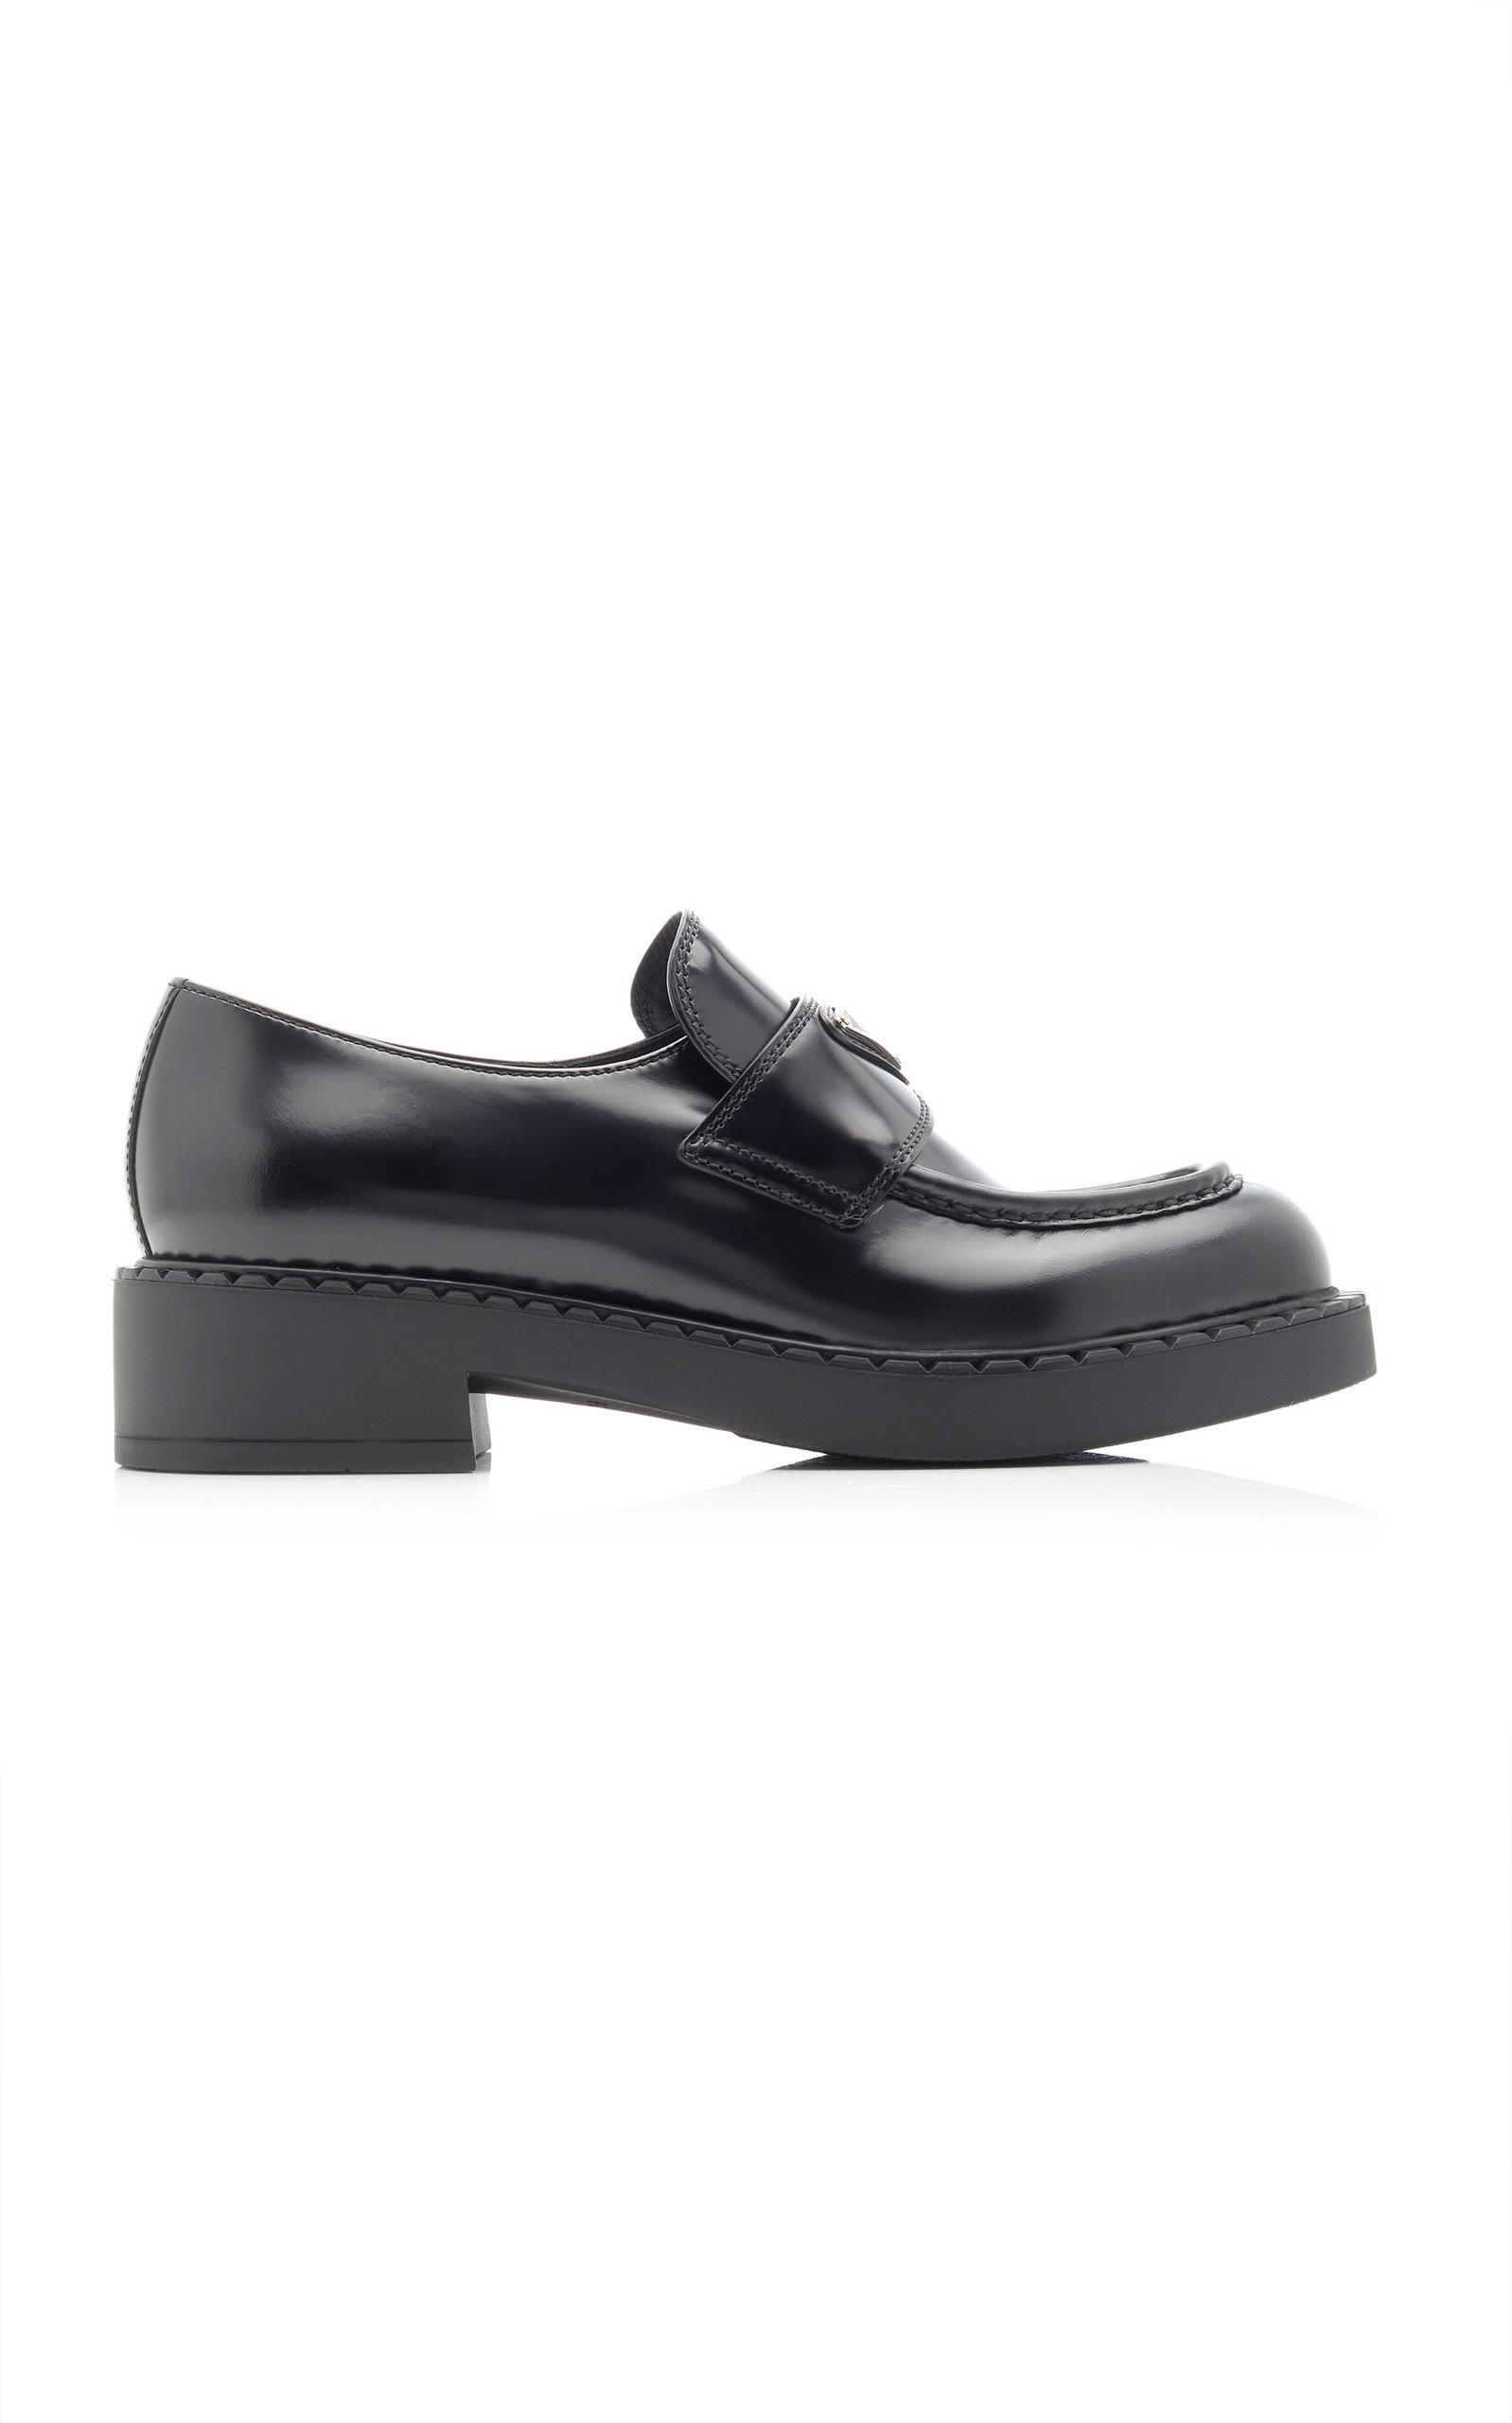 Prada - Women's Leather Loafers  - Black - IT 38 - Moda Operandi